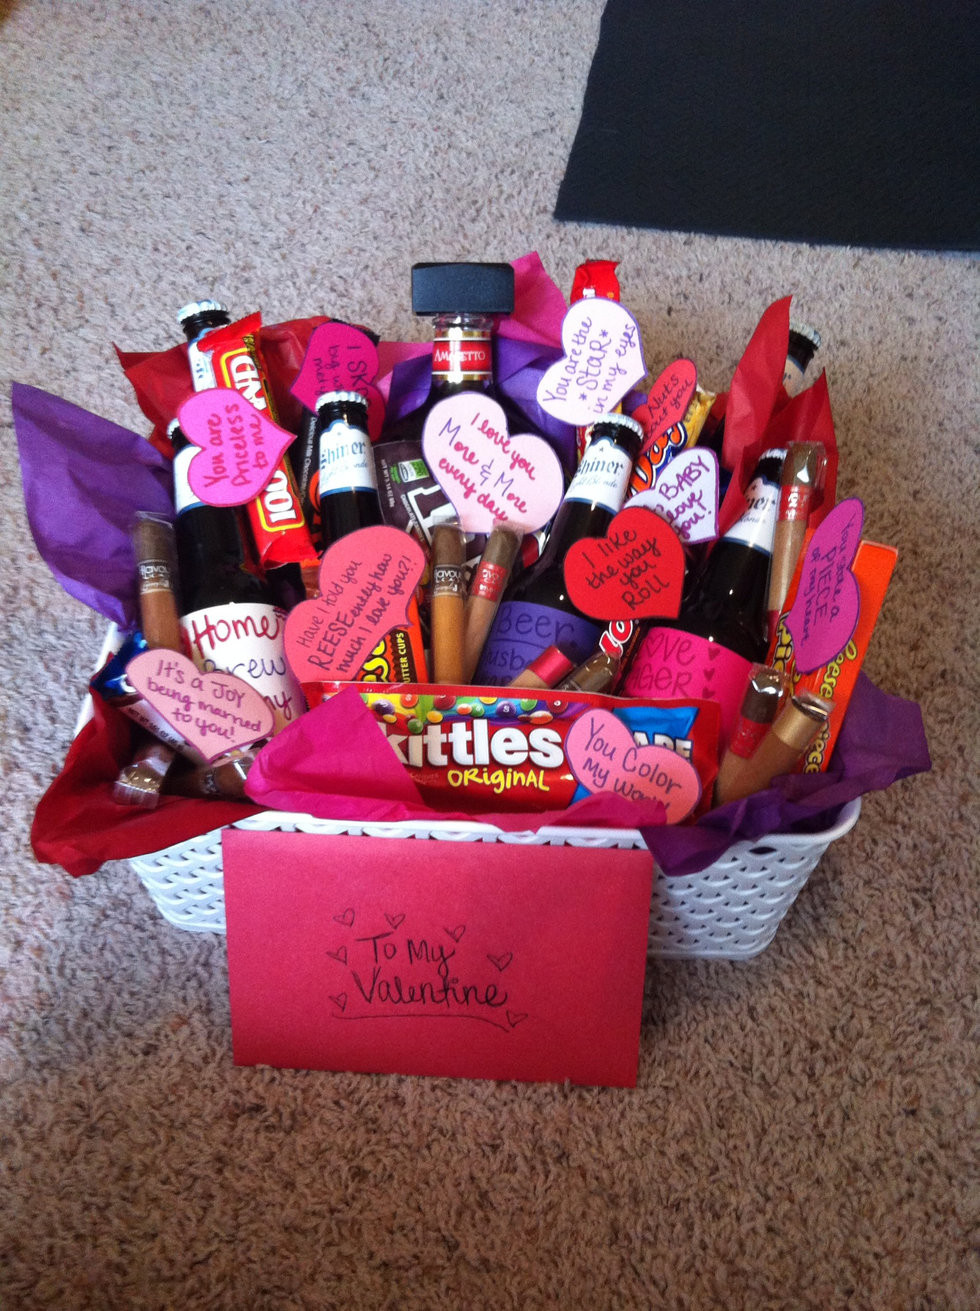 Cute Gift Ideas For Boyfriend For Valentines Day
 25 Ideas for Cute Gift Ideas for Your Boyfriend Home